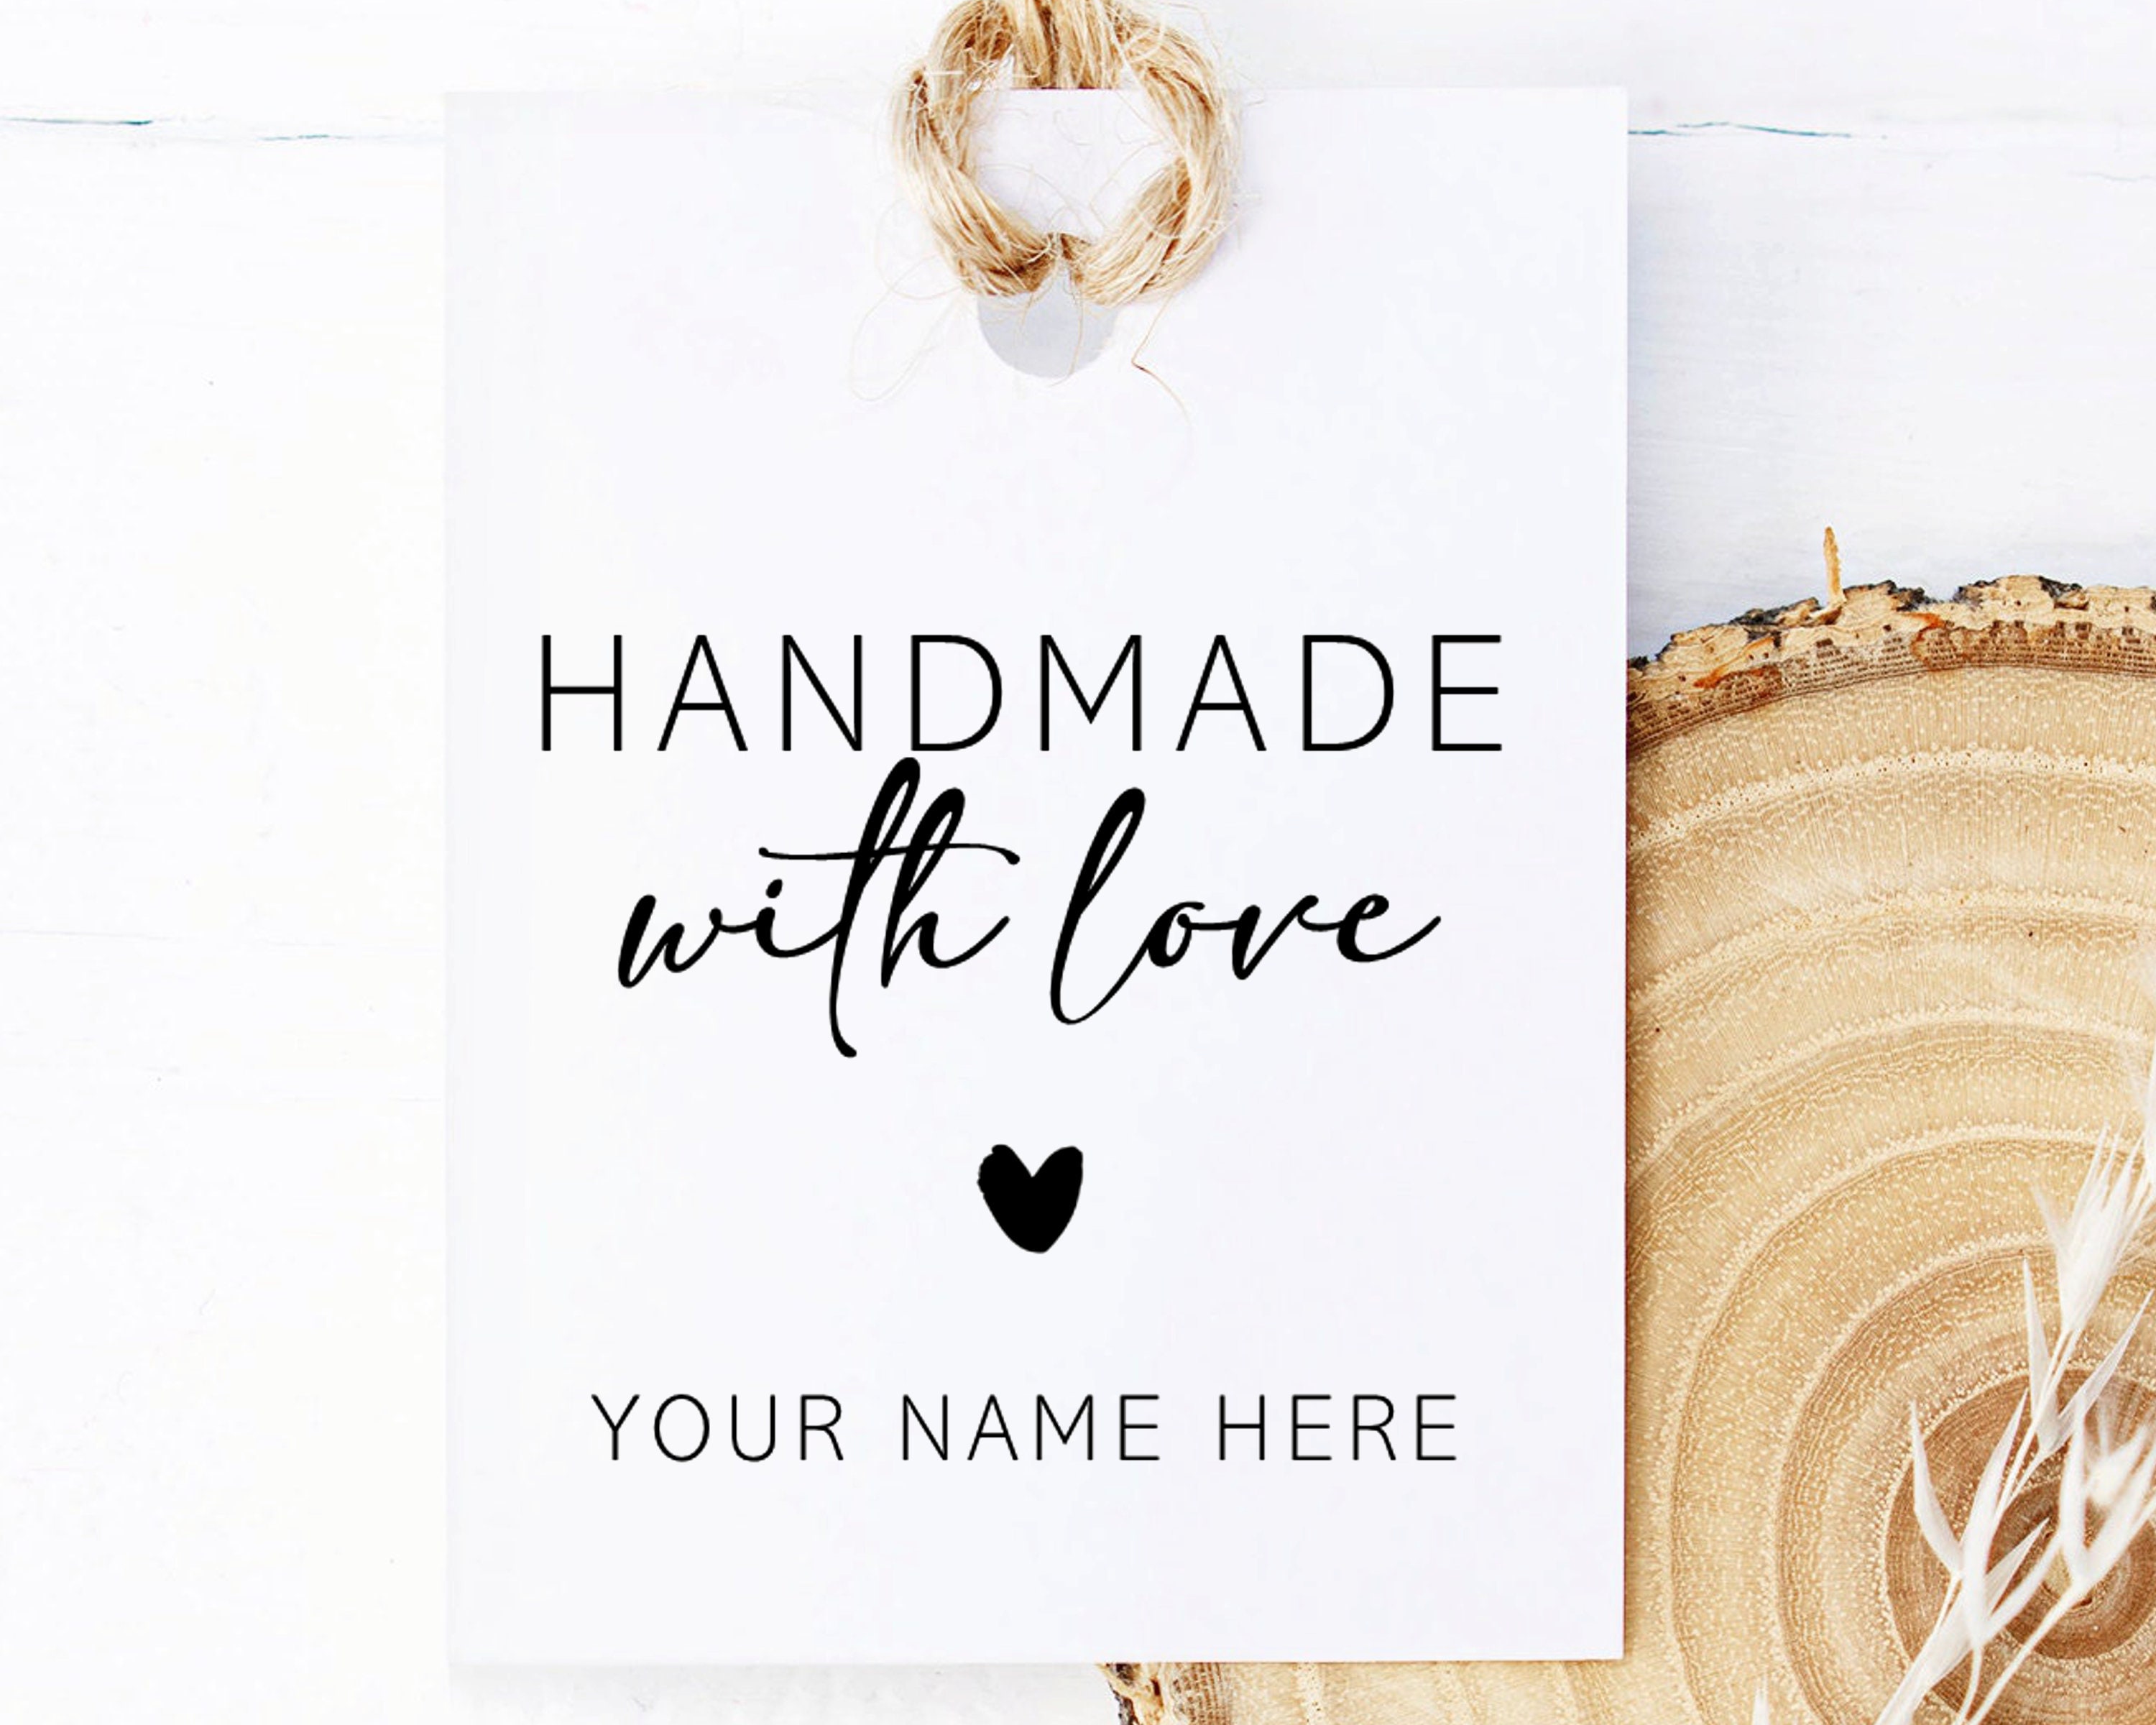 Handmade with Love Tags - Jenn Giam Smith